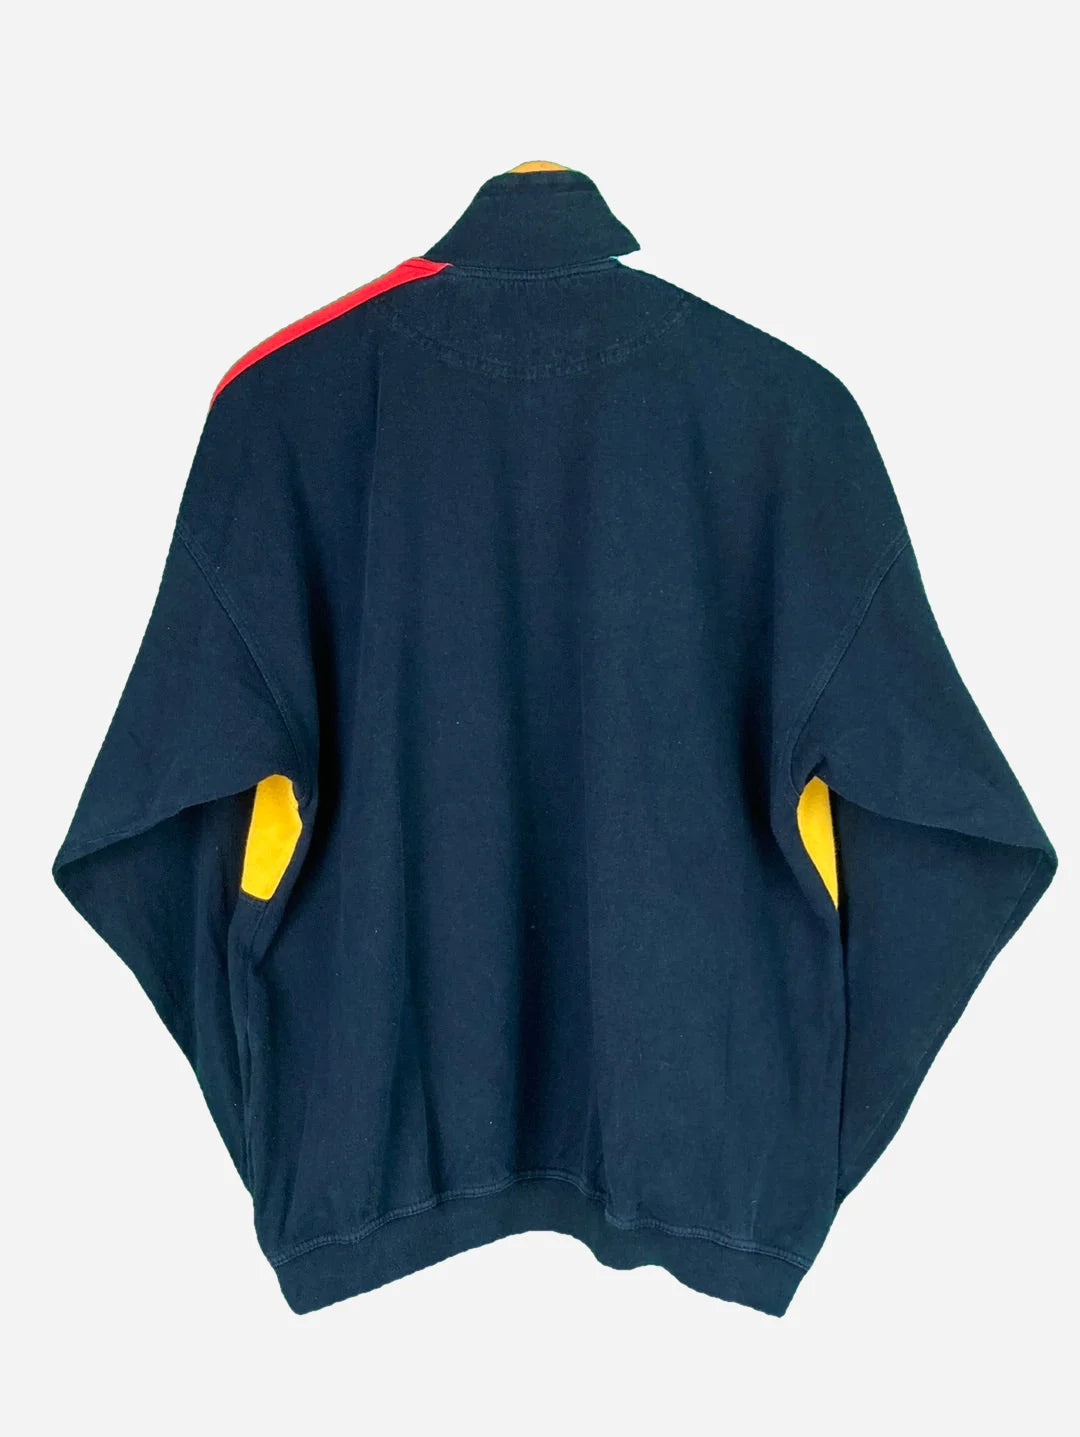 H2O Sportswear Sweater (L)